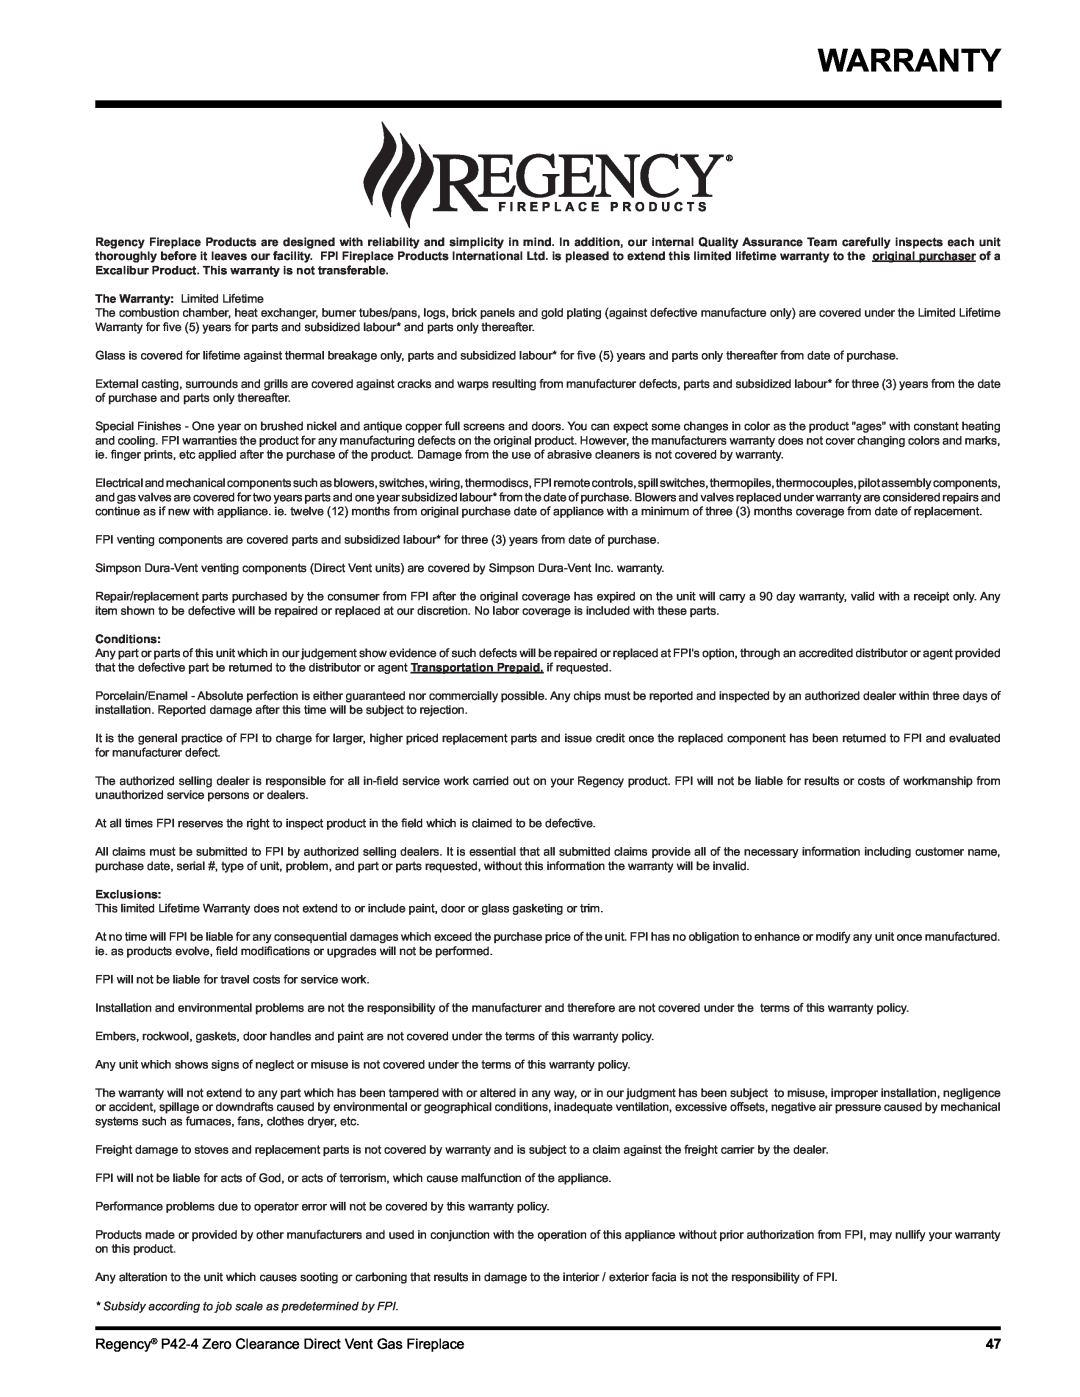 Regency P42-LP4, P42-NG4 installation manual Warranty, Conditions, Exclusions 